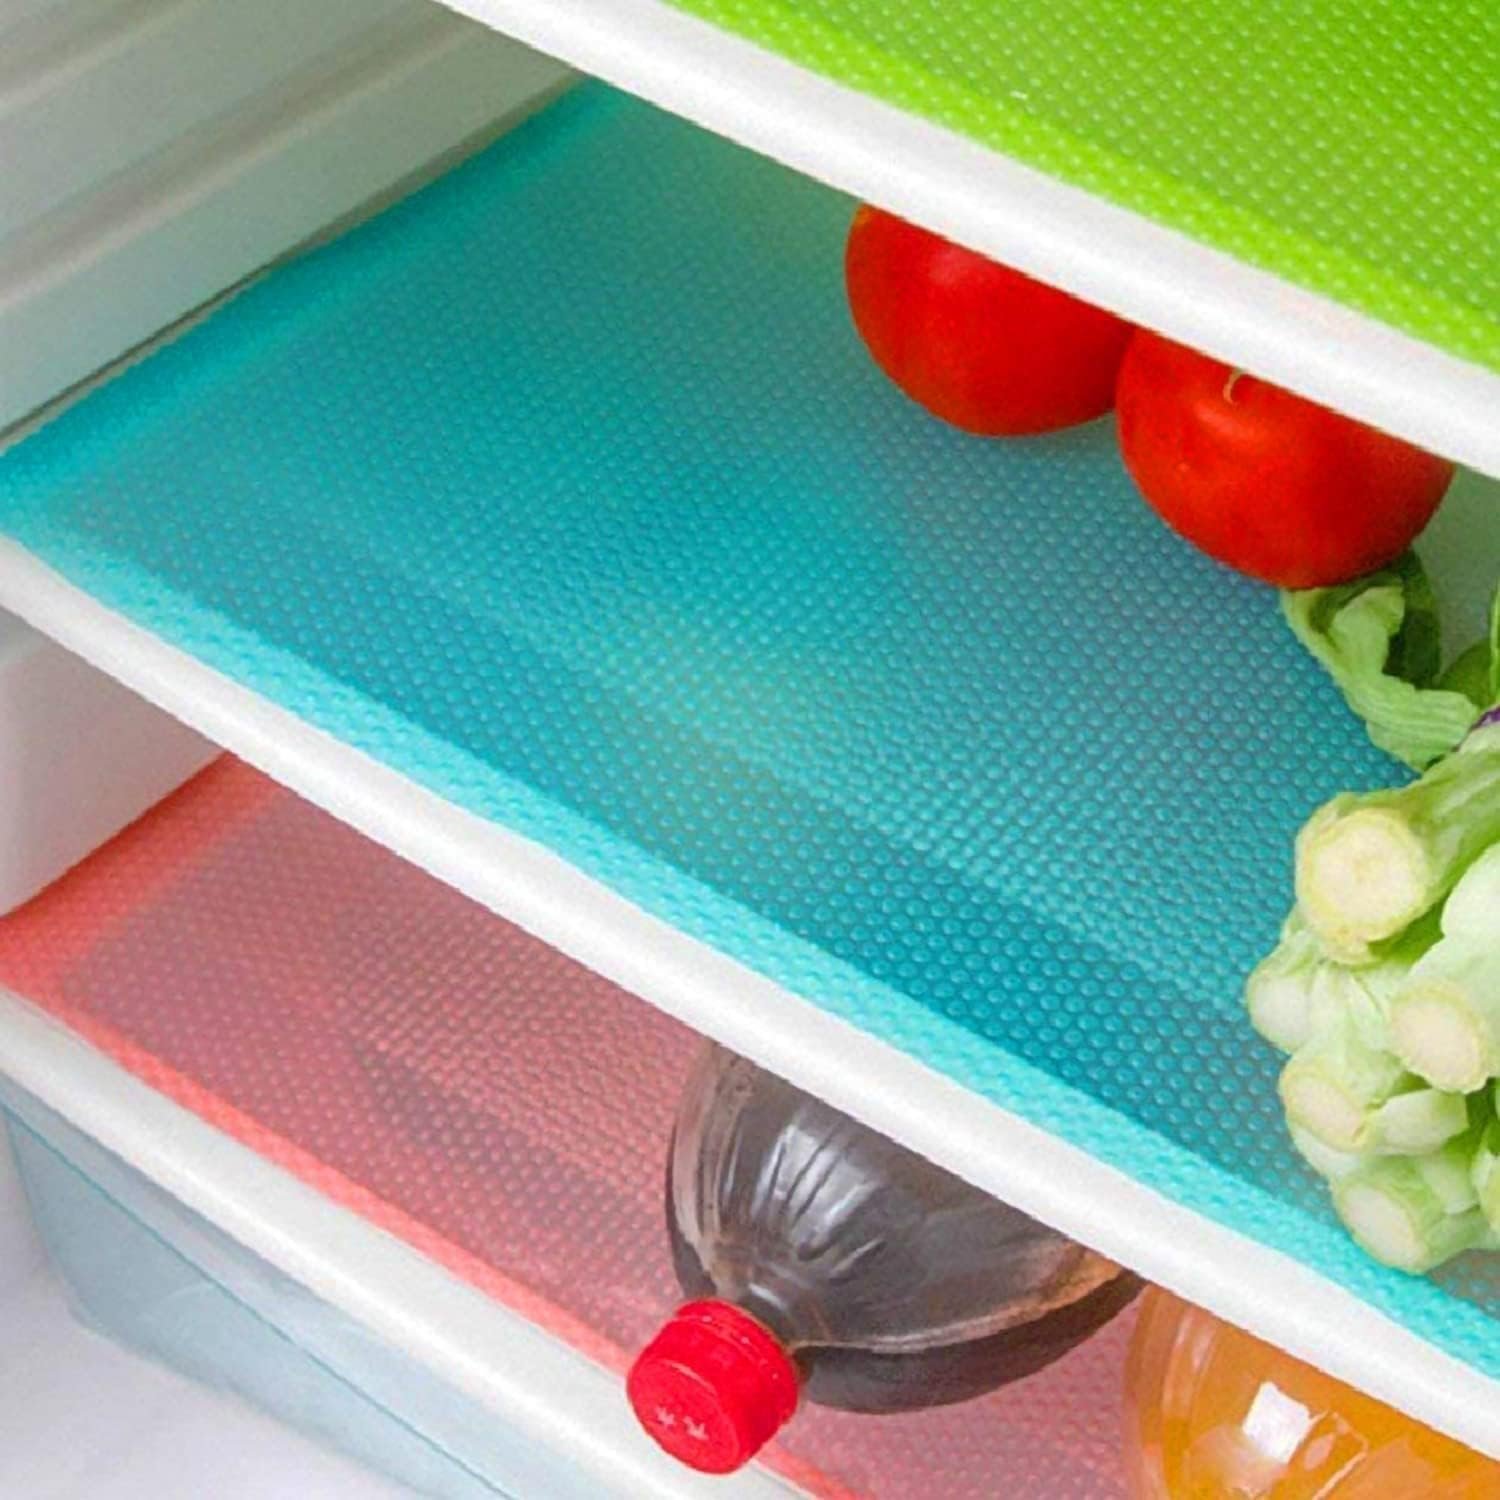 Aiosscd 7 PCS Shelf Mats Antifouling Refrigerator Liners Washable Refrigerator Pads Fridge Mats Drawer Placemats Home Kitchen Gadgets Accessories Organization for Top Freezer(2green+2pink+3blue)